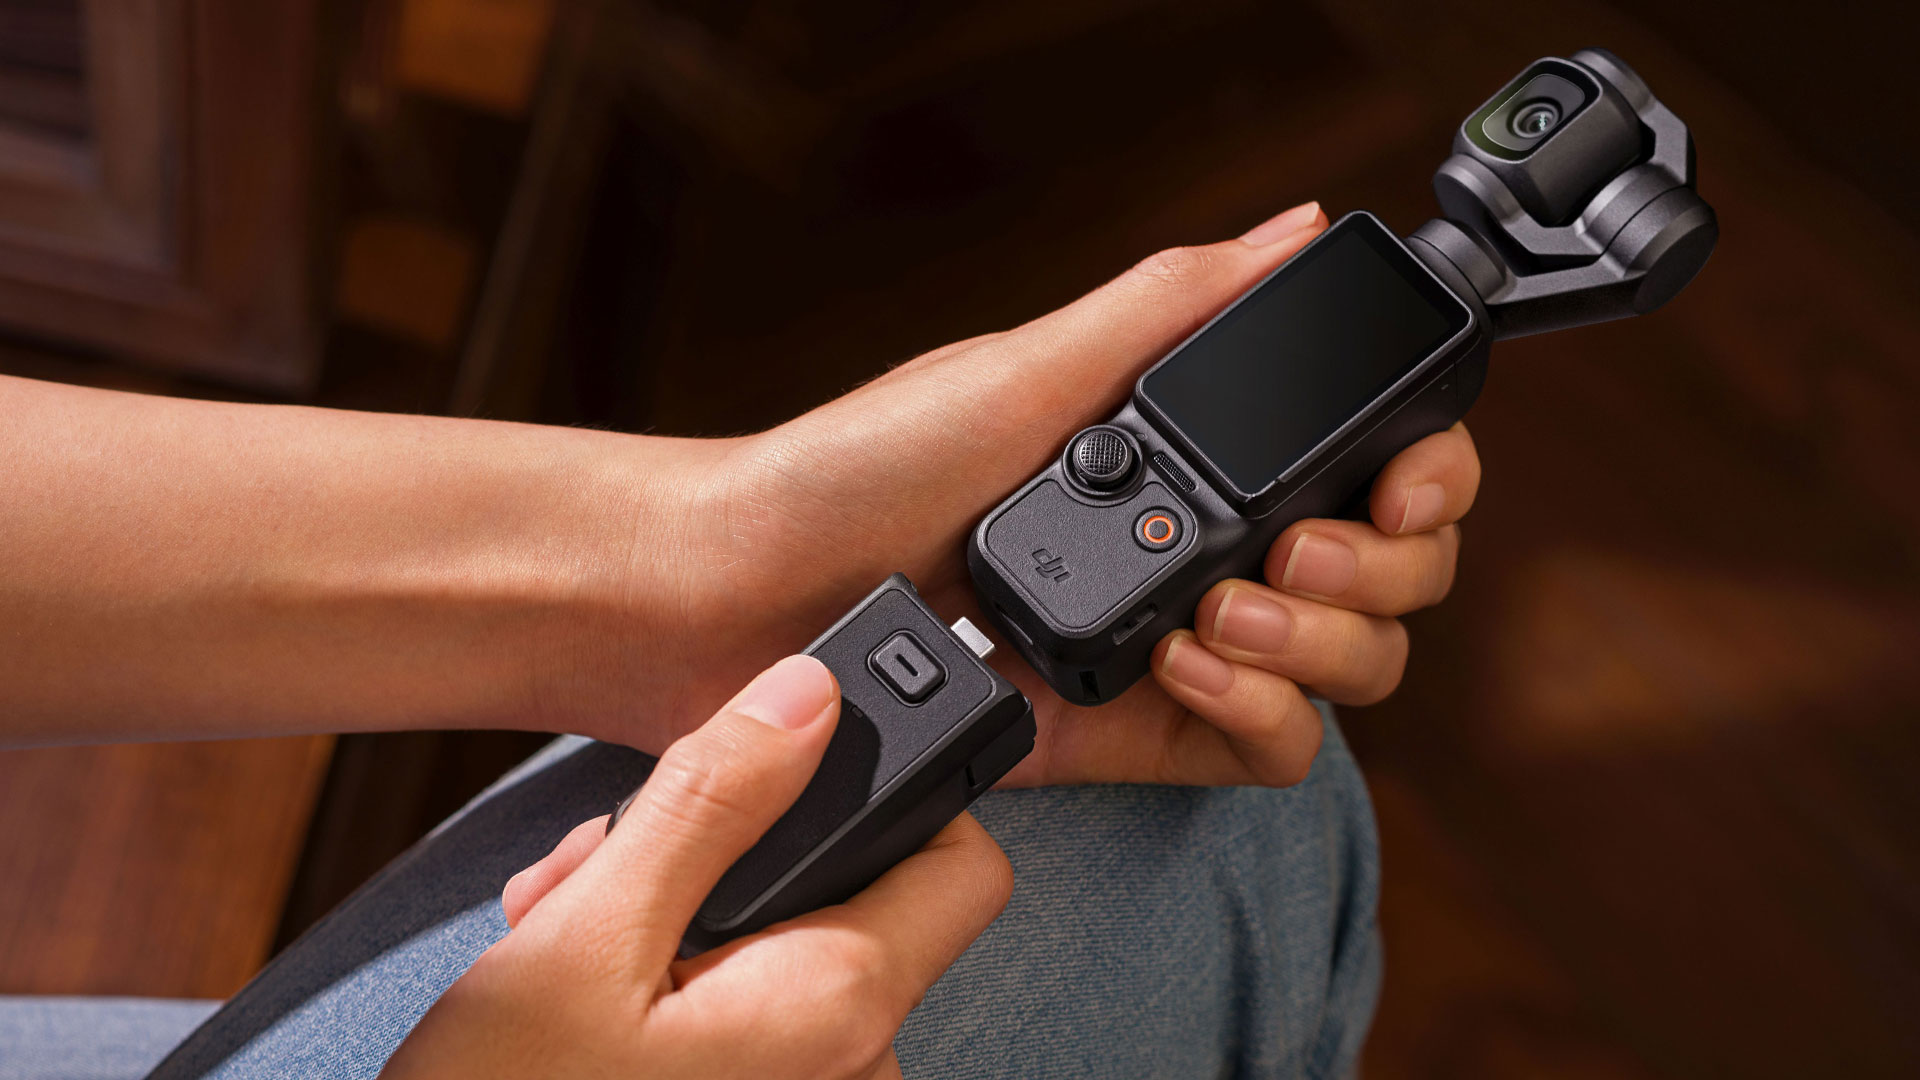 DJI has introduced the OSMO Pocket 3 camera with a 1 CMOS sensor